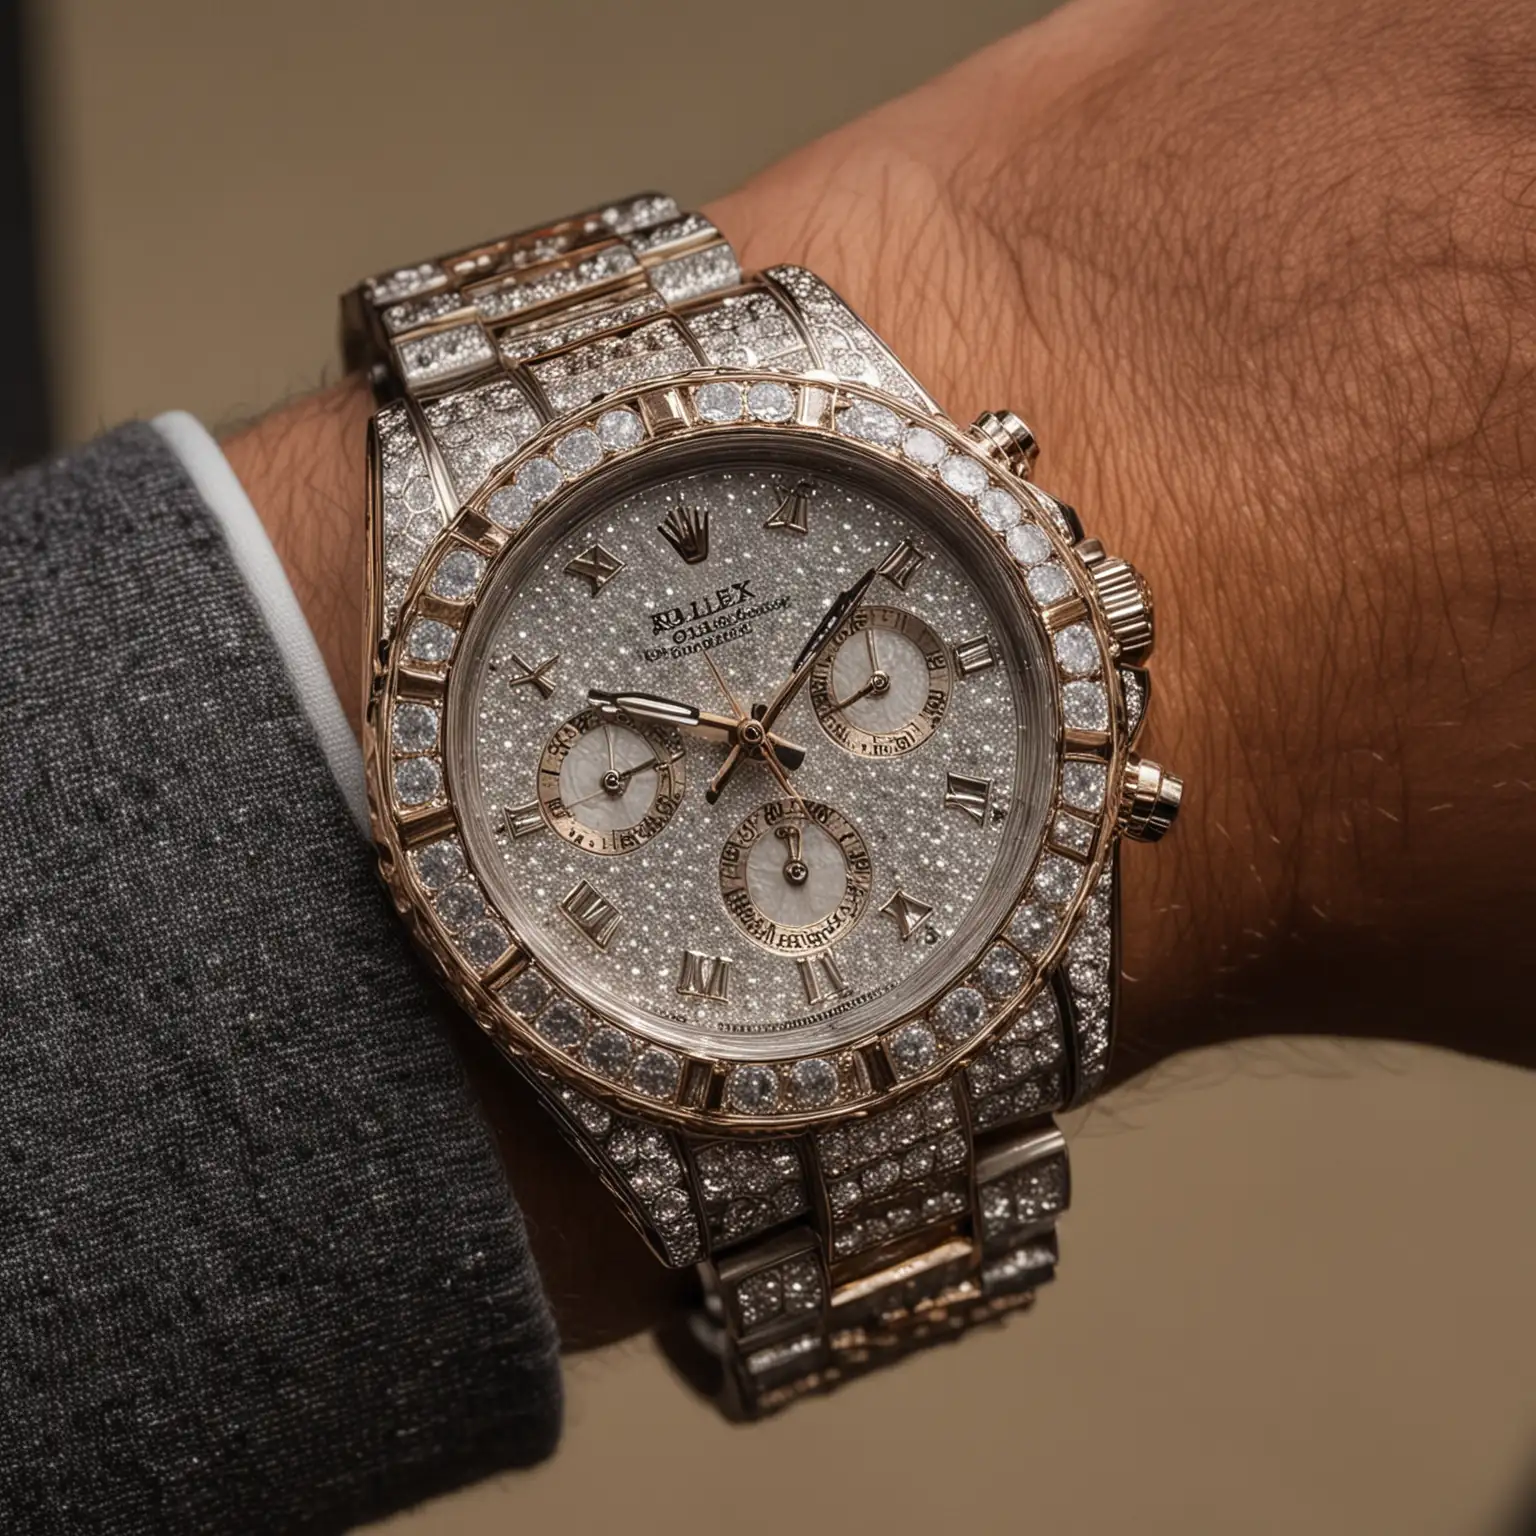 Hispanic Man Wearing Expensive DiamondStudded Rolex Watch Outdoors